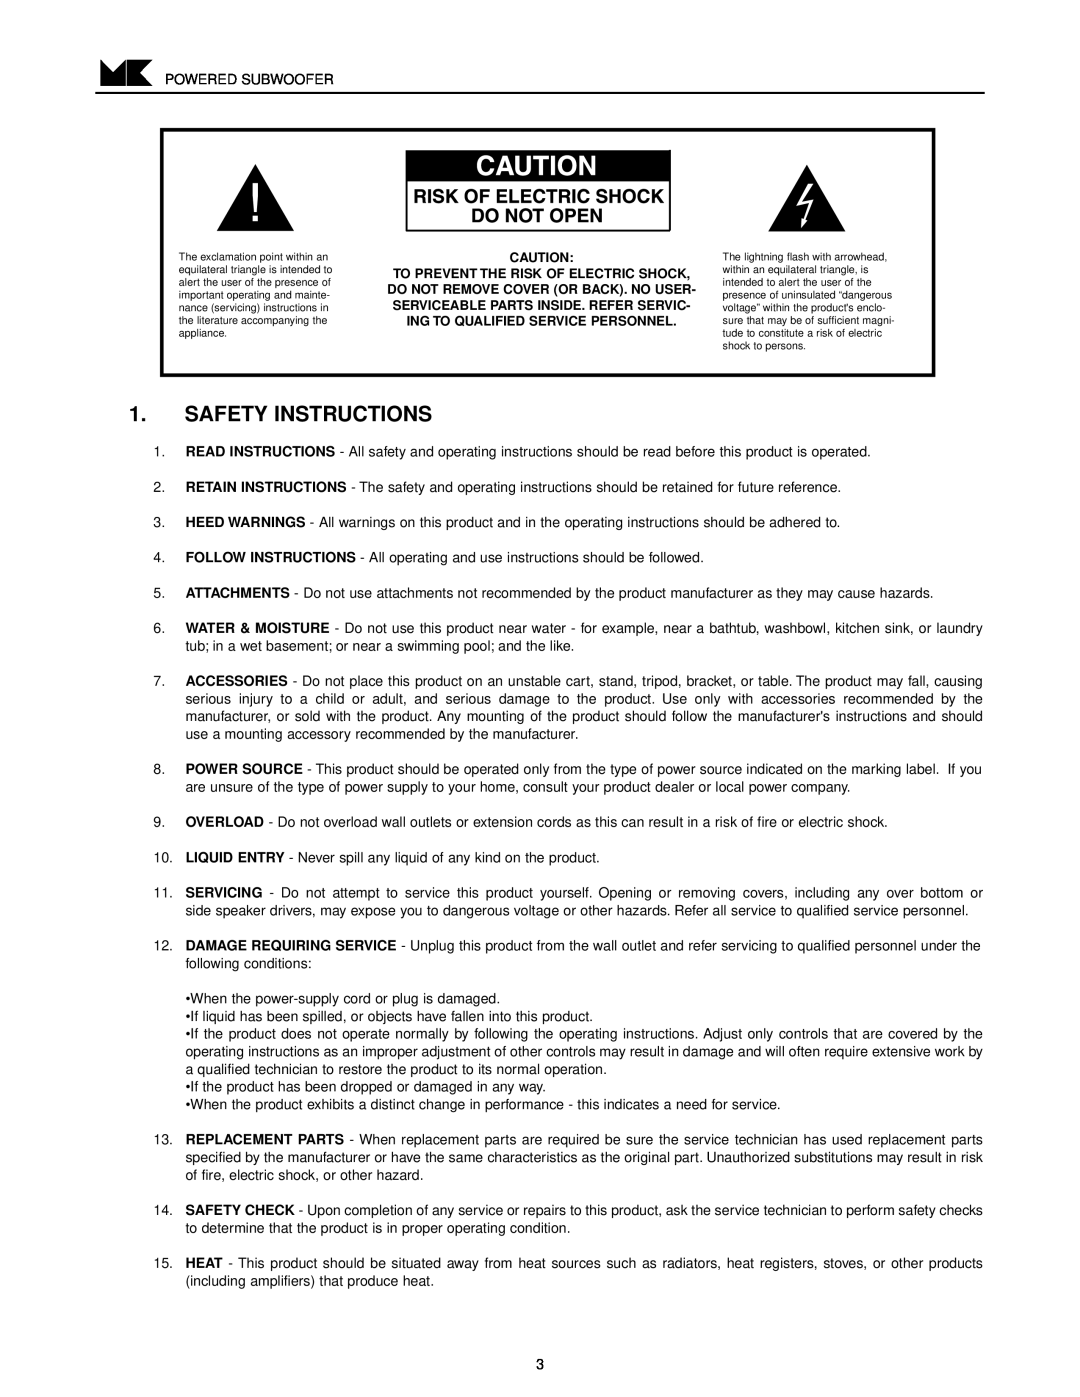 MK Sound V-851, V-850 operation manual Safety Instructions 